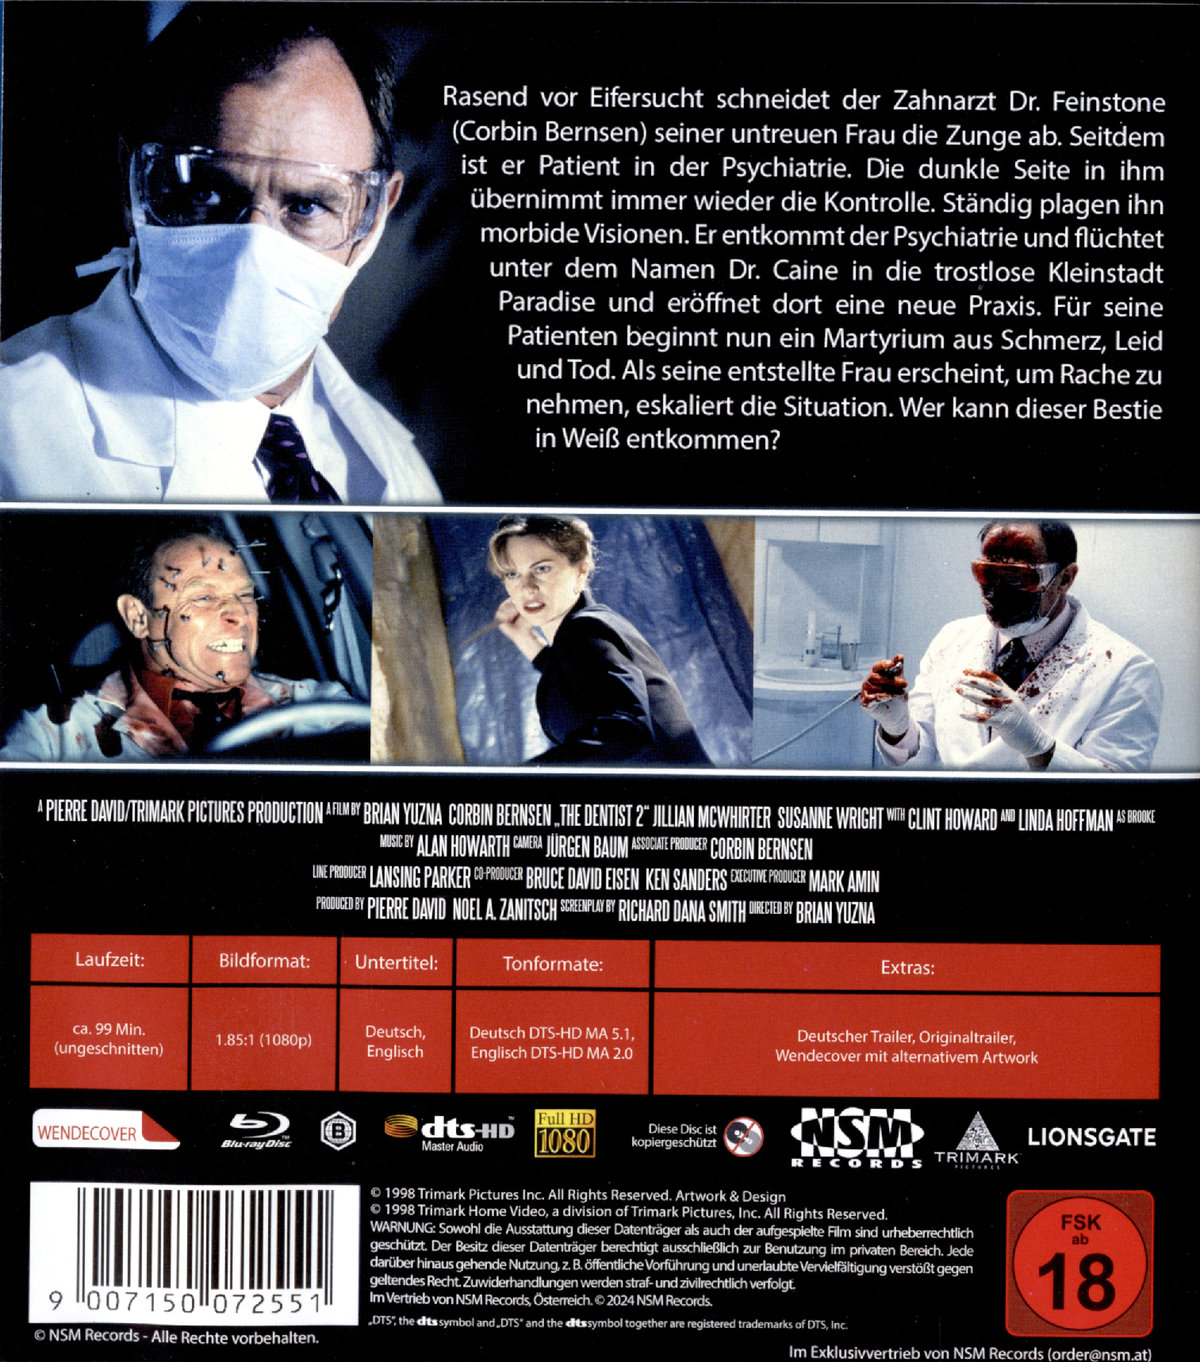 The Dentist 2 (uncut)  (Blu-ray Disc)